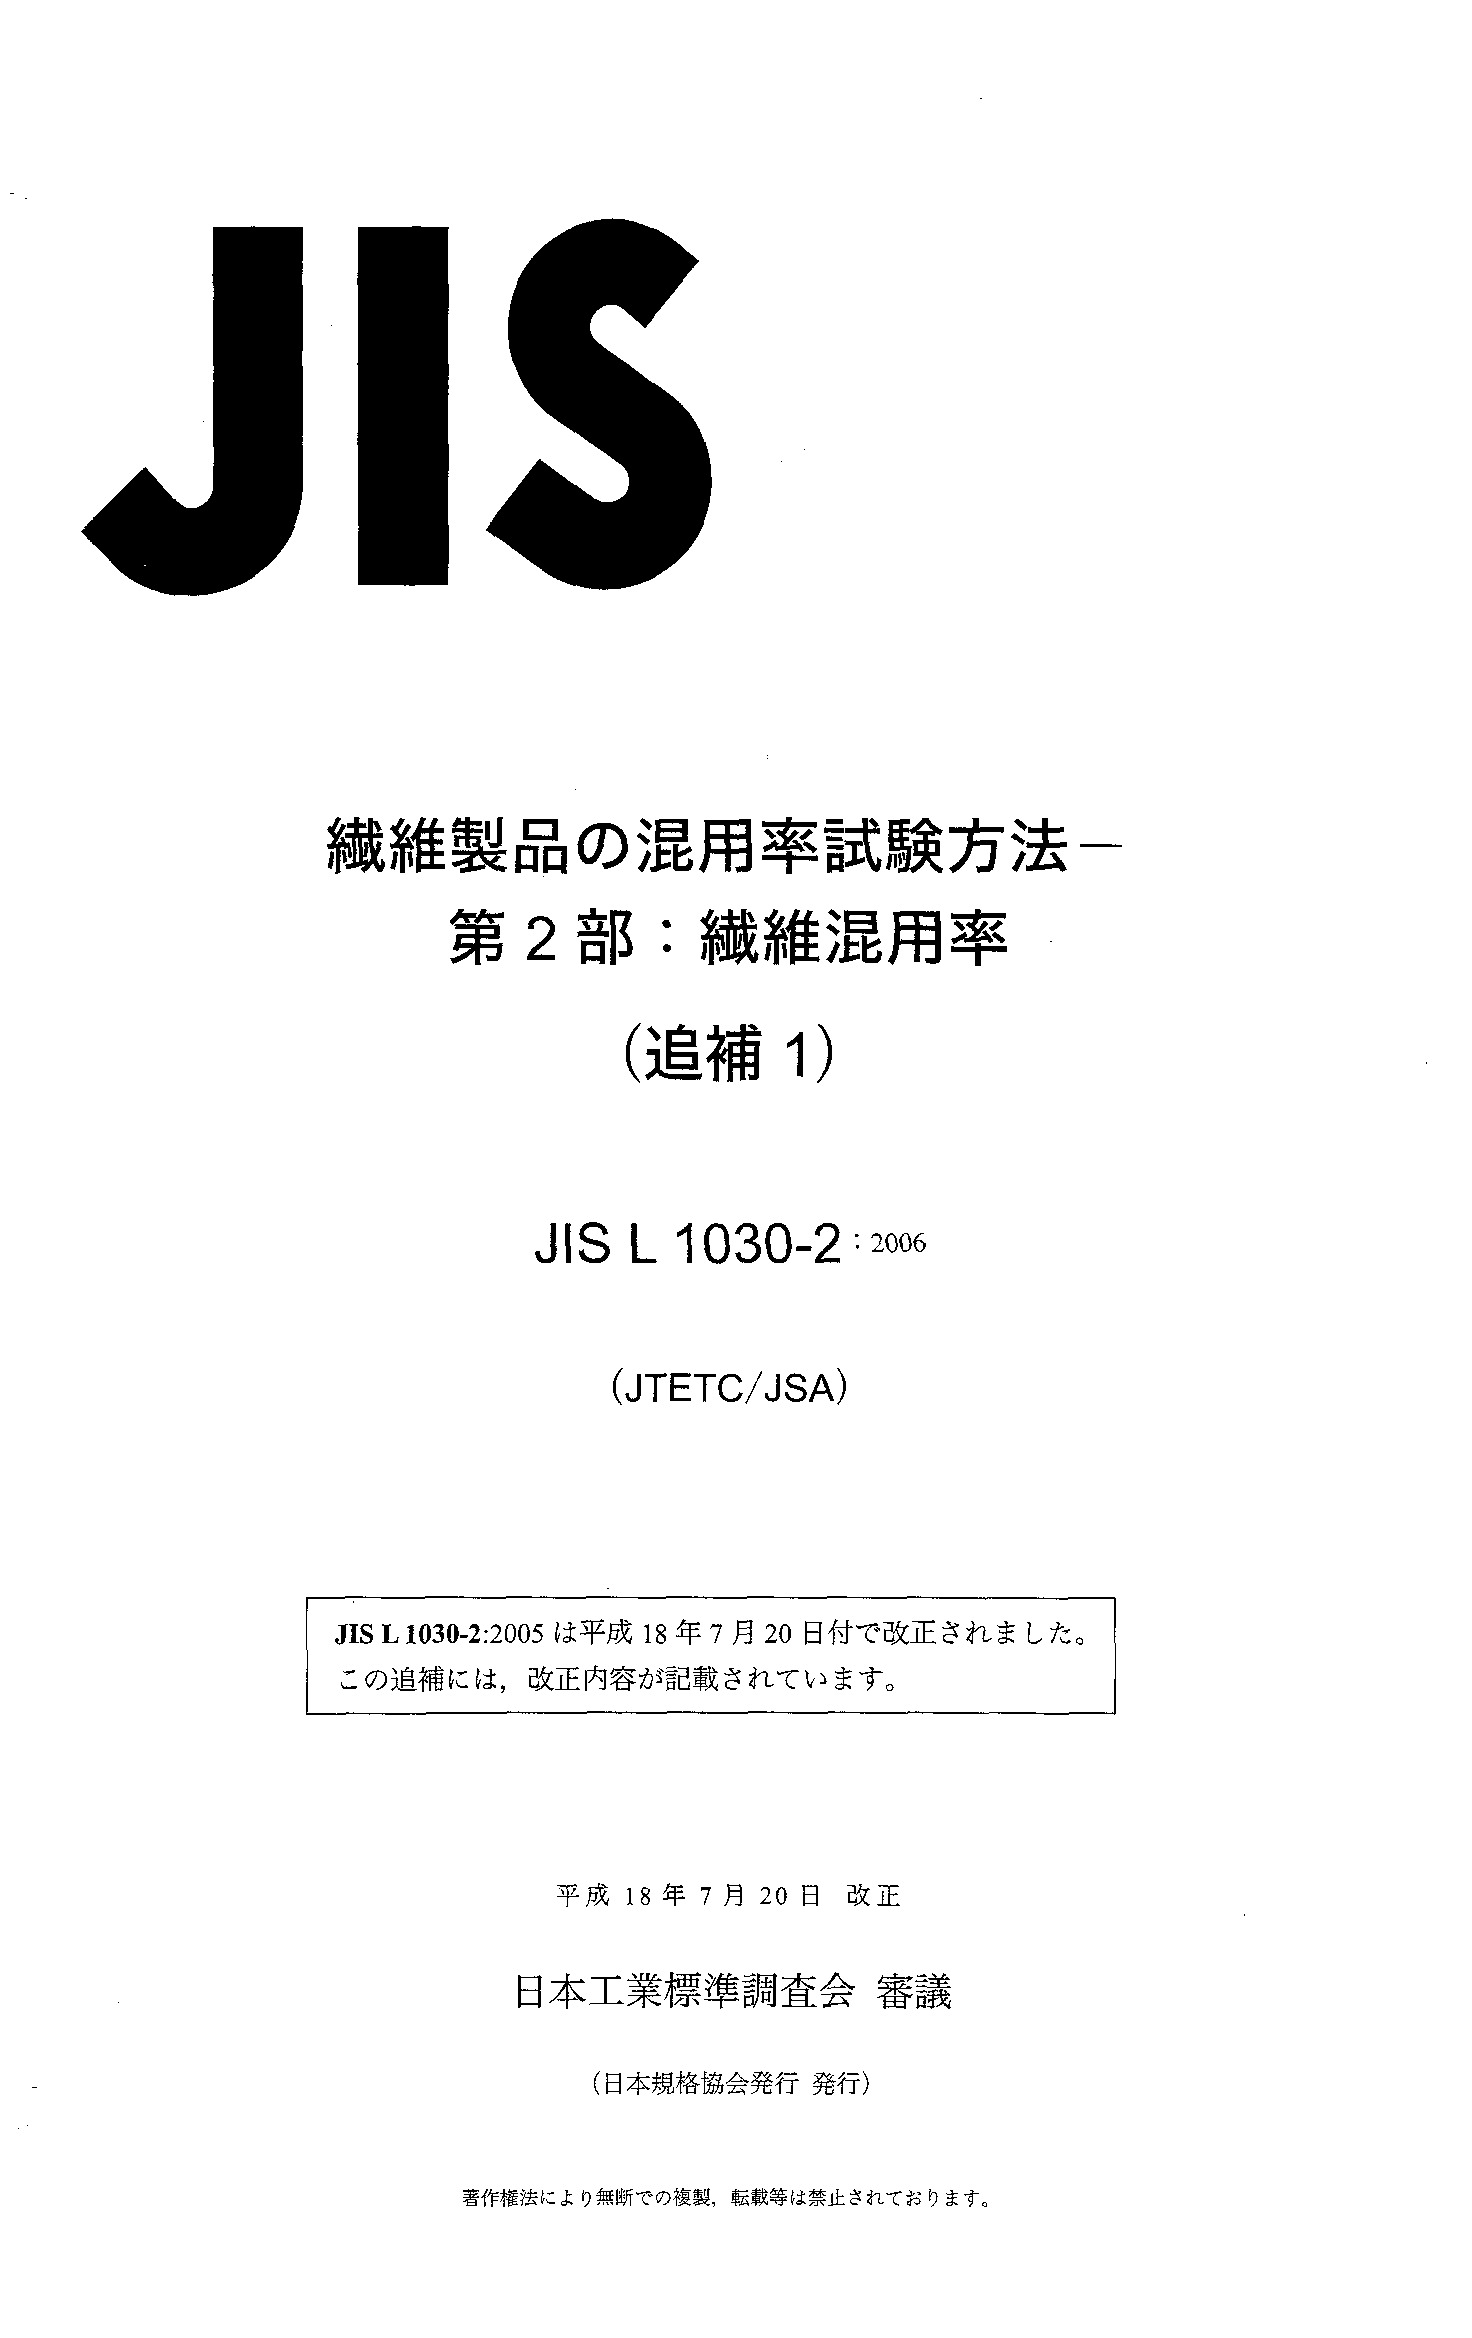 JIS L 1030-2 AMD 1:2006